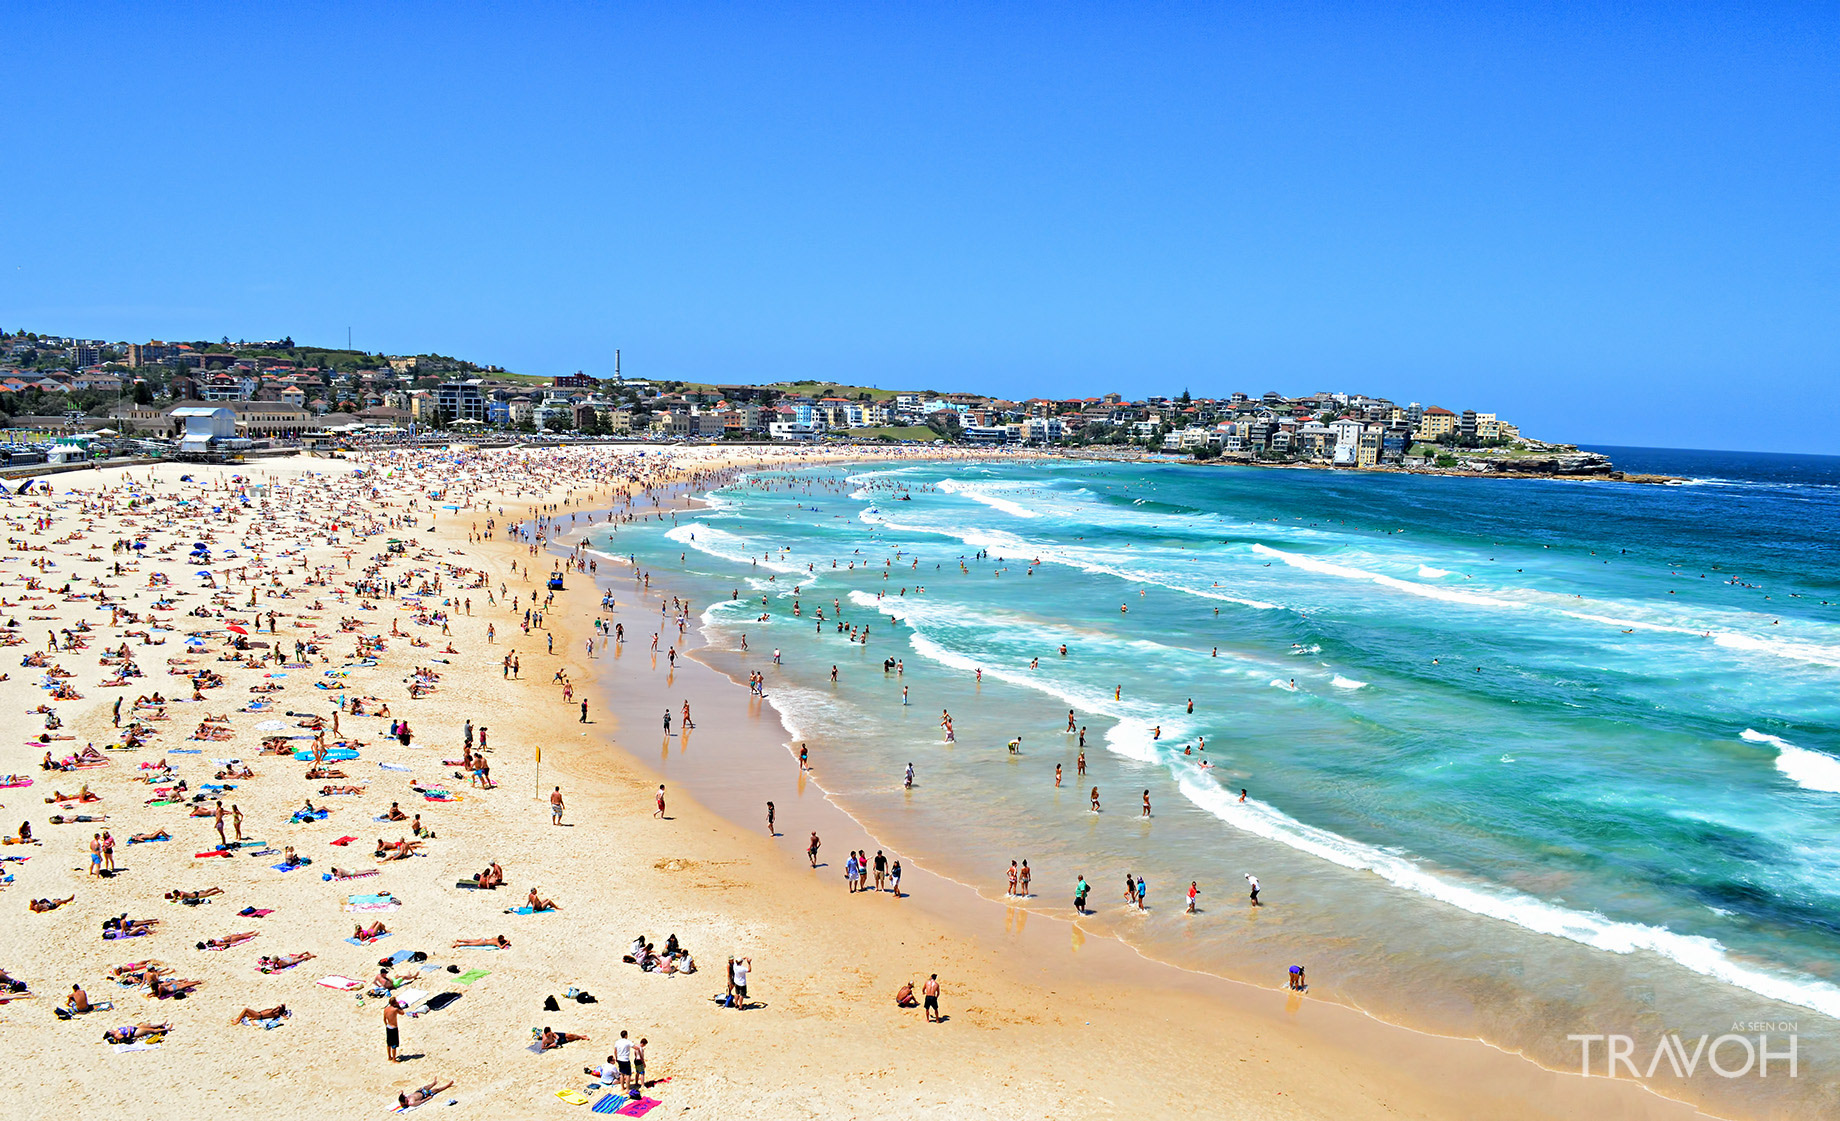 Bondi Beach - Exploring 10 of the Top Beaches in Sydney, Australia